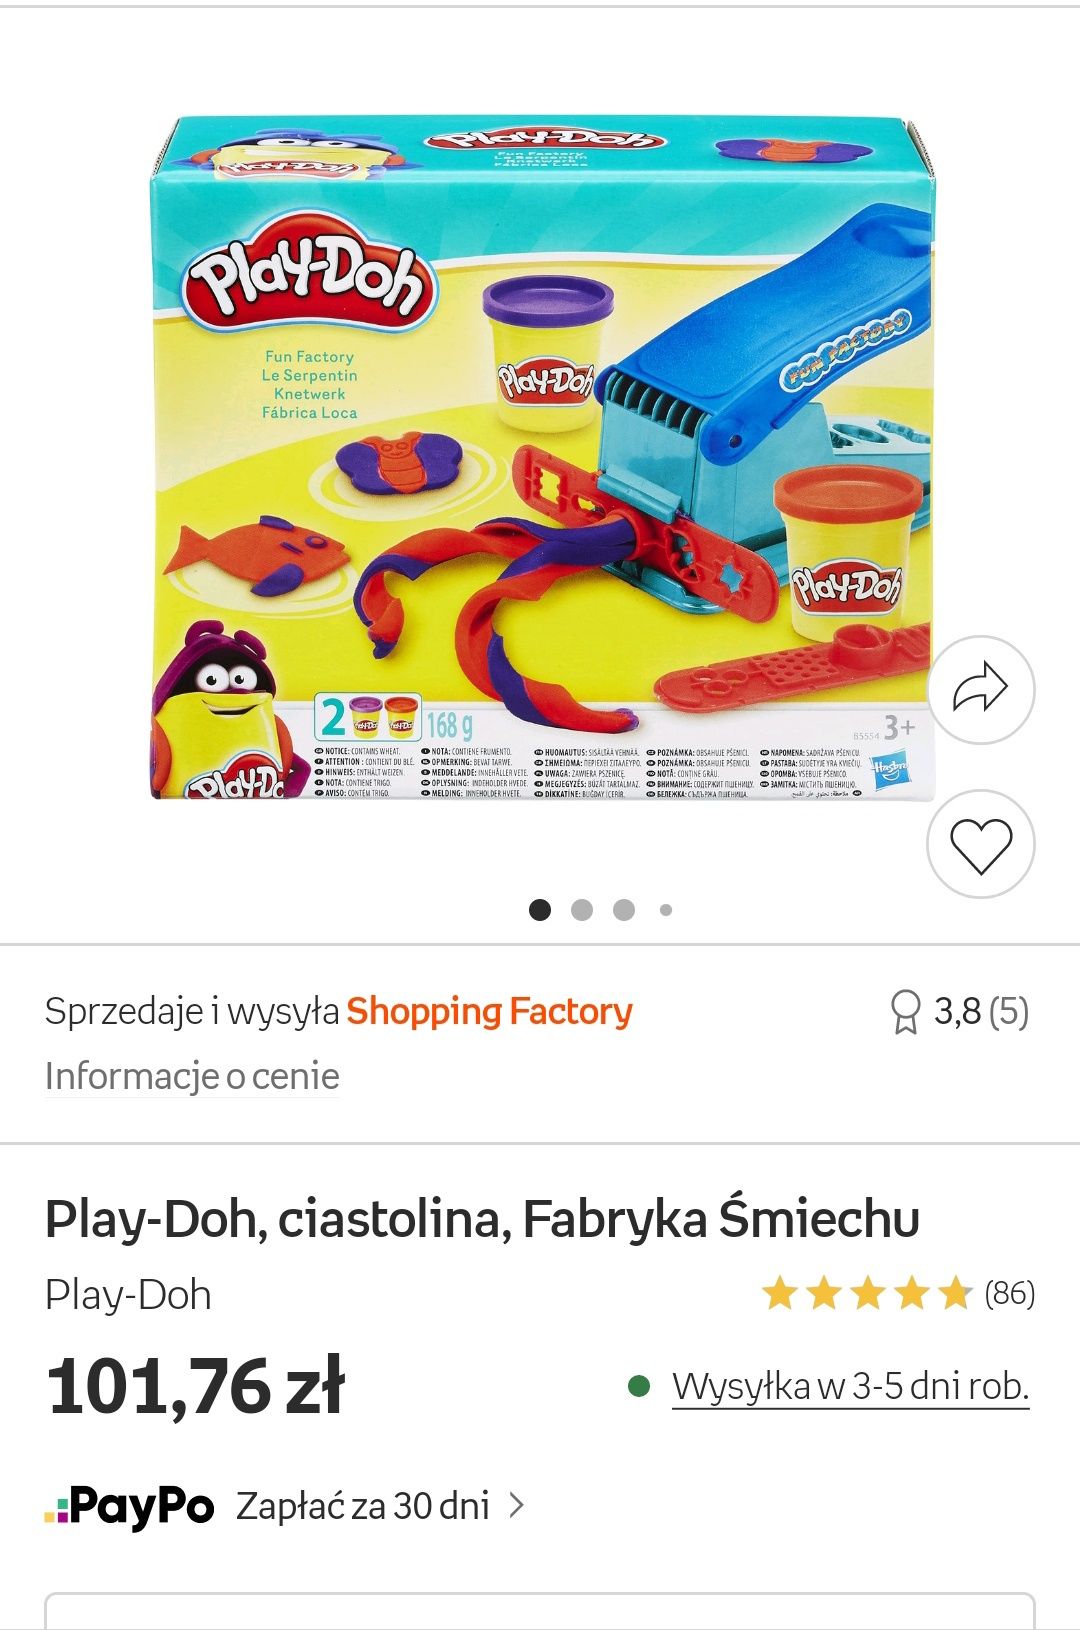 Play-Doh, ciastolina, Fabryka Śmiechu, Prasa do Ugniatania
Prasa do Ug